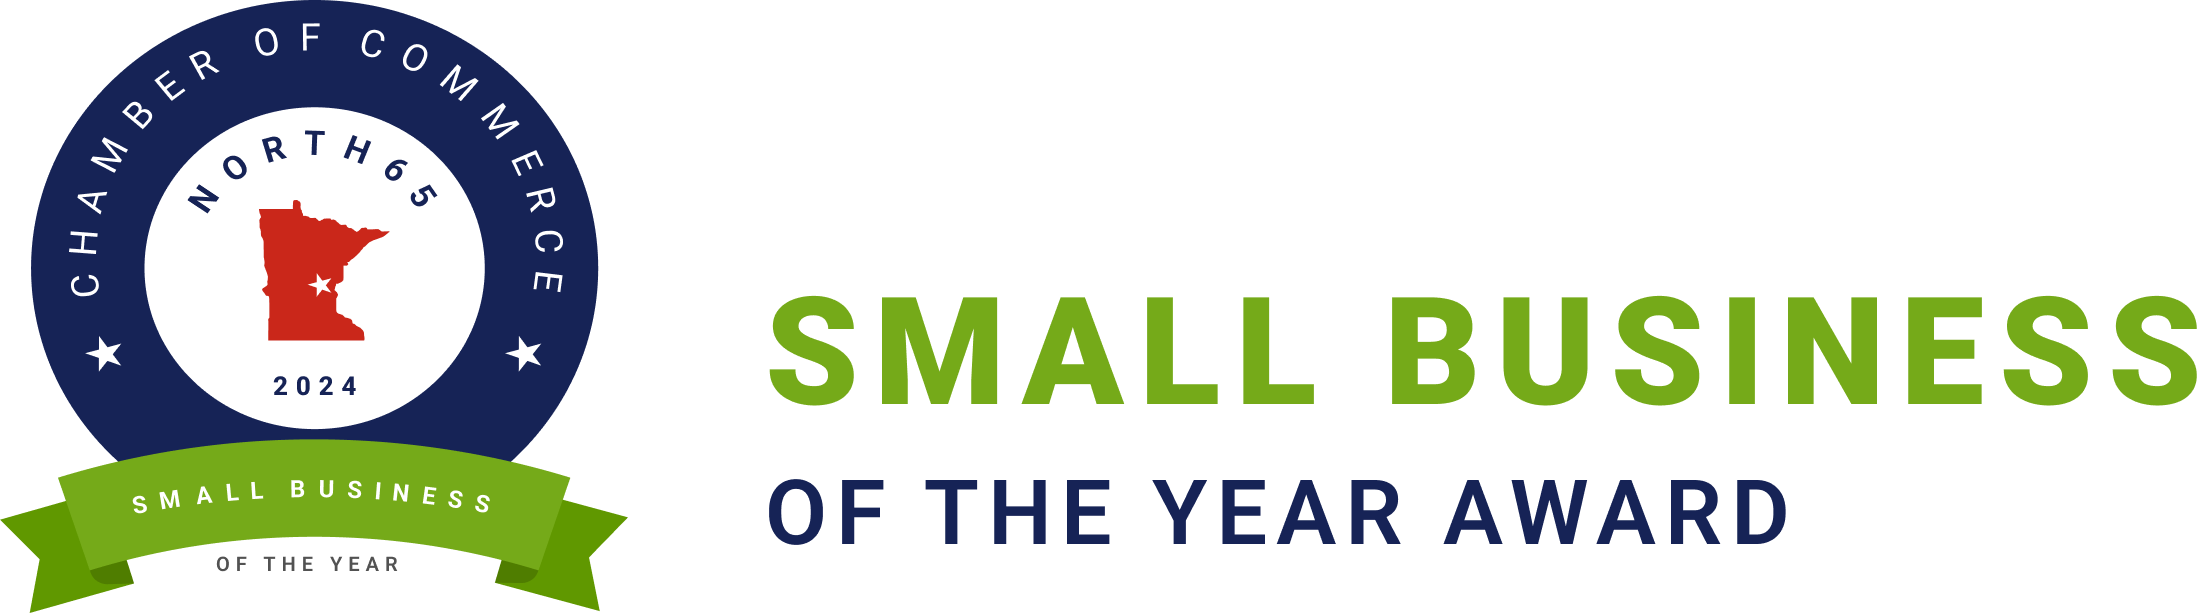 Small Business Award 2024 Image